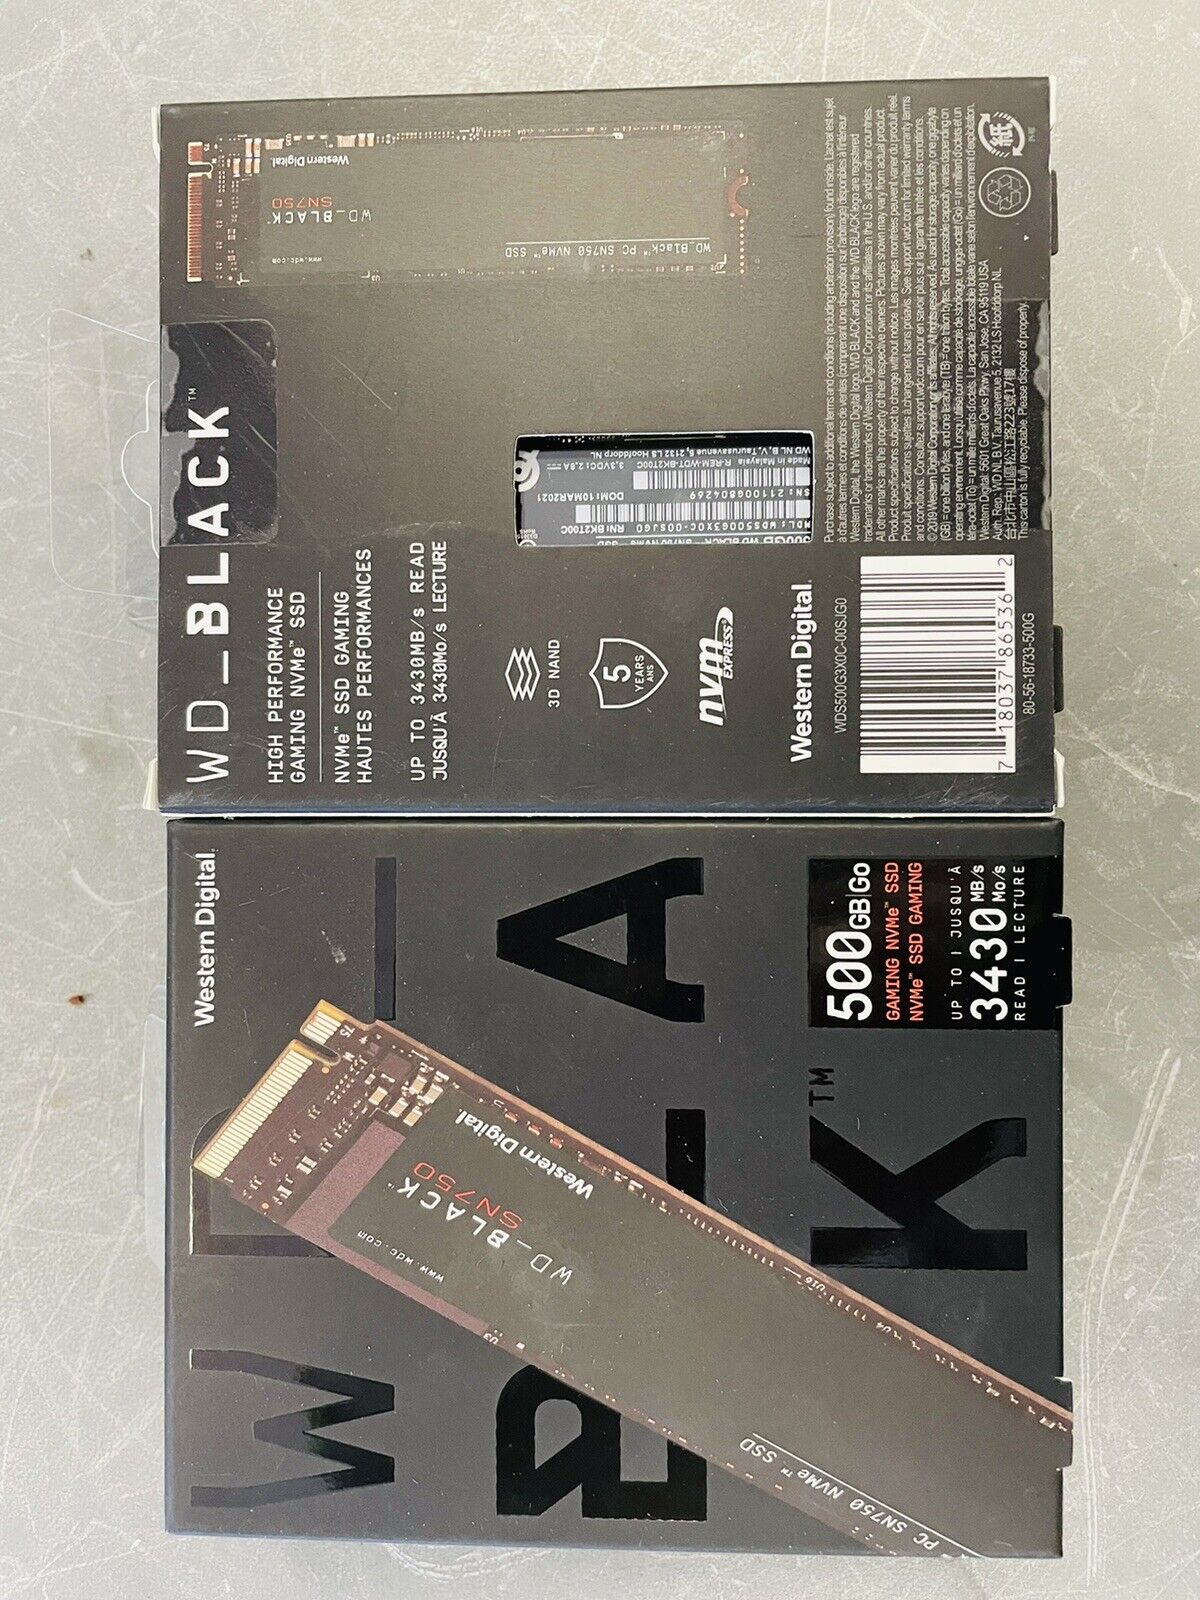 WD_Black SN750 High Performance Gaming NVMe SSD 500GB